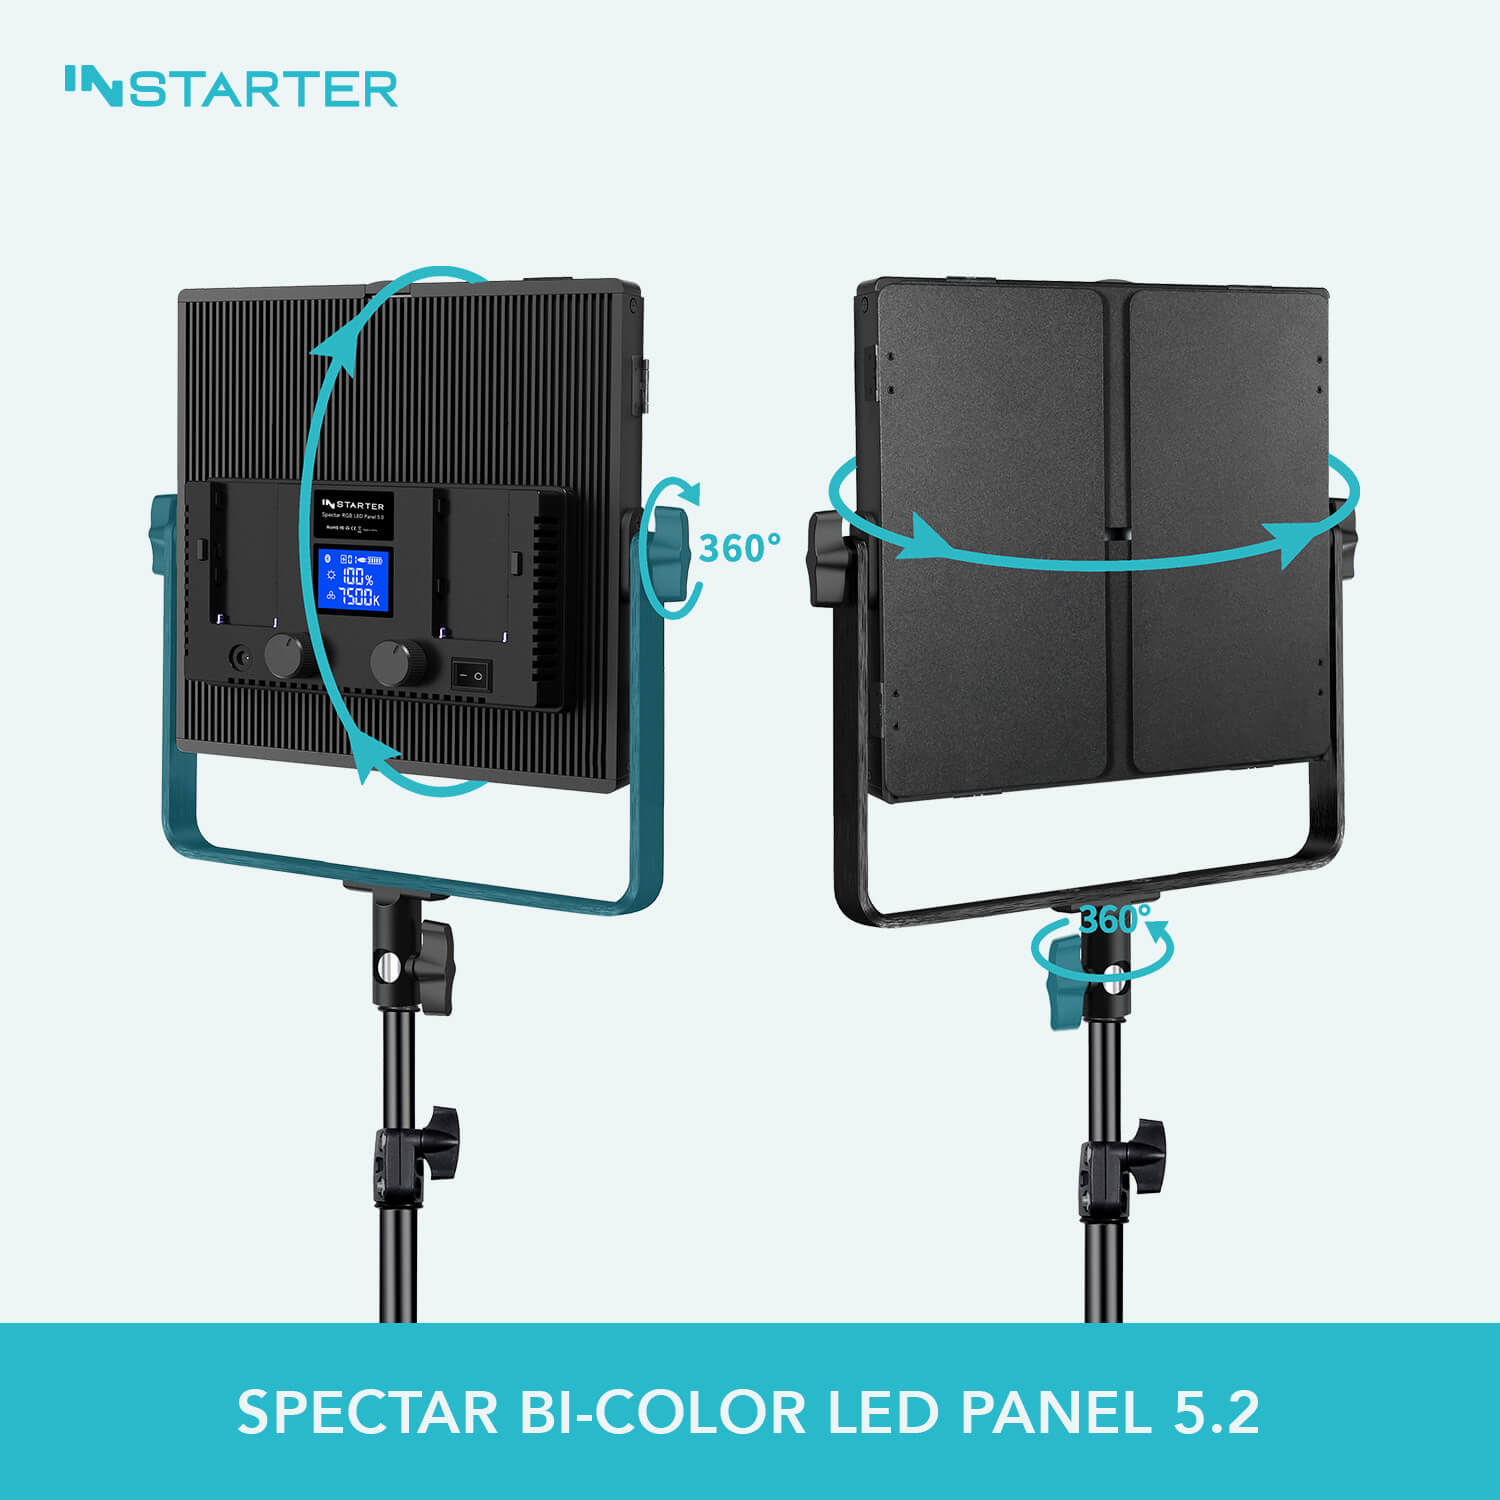 INStarter Spectar Bi-Color LED Panel 5.2 Mounting